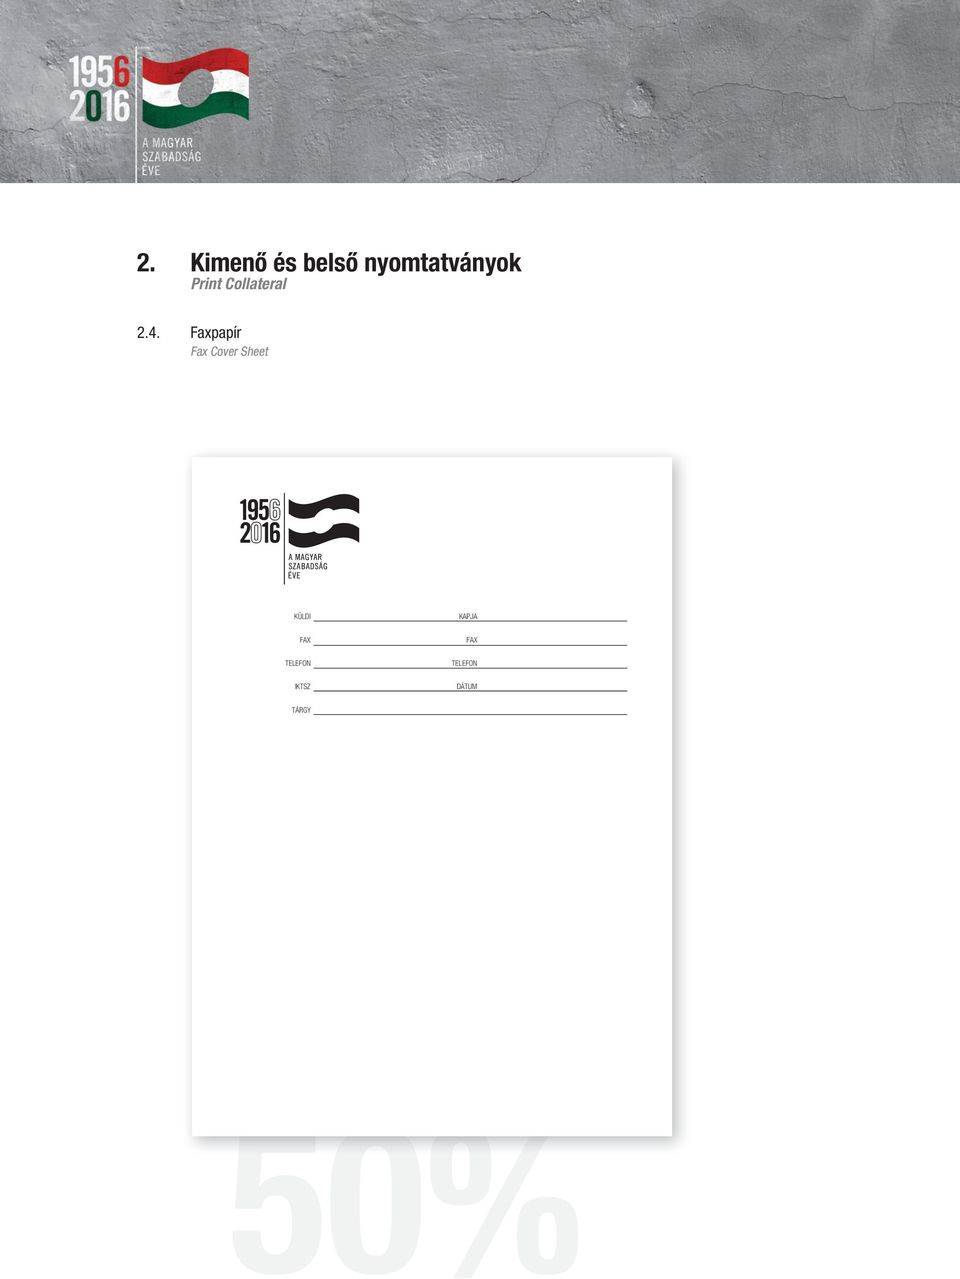 Faxpapír Fax Cover Sheet KÜLDI FAX